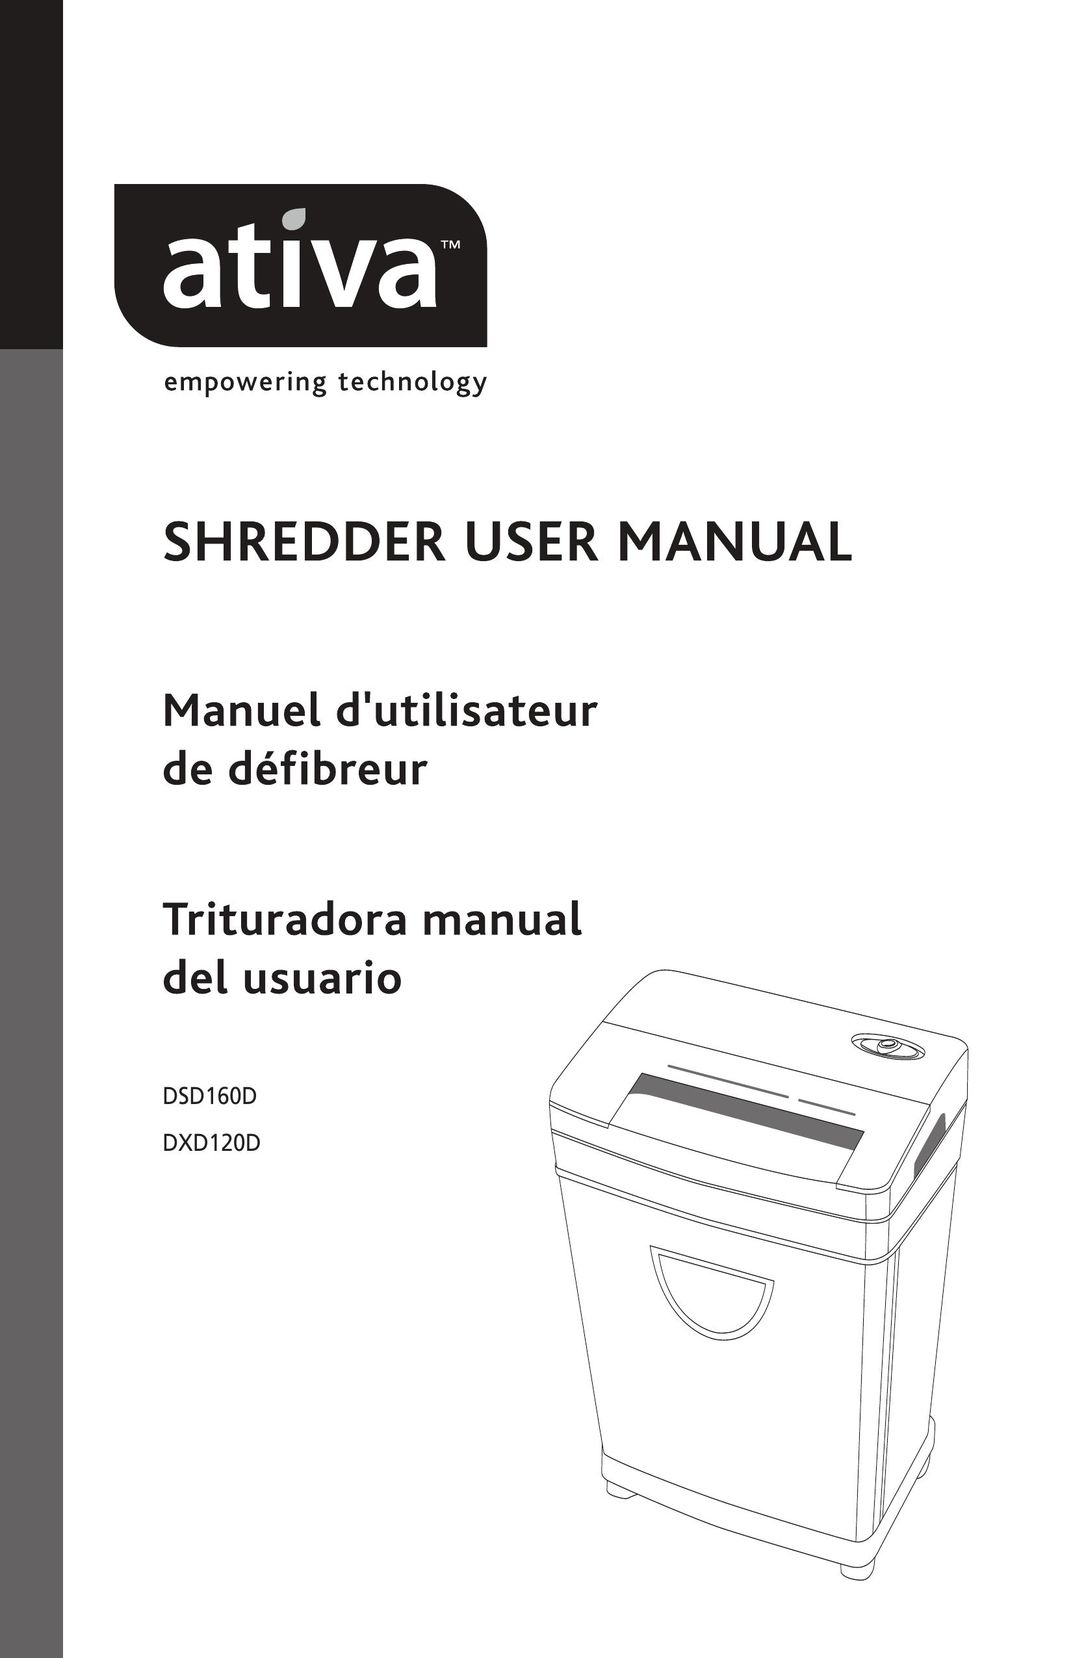 Ativa DXD120D Paper Shredder User Manual